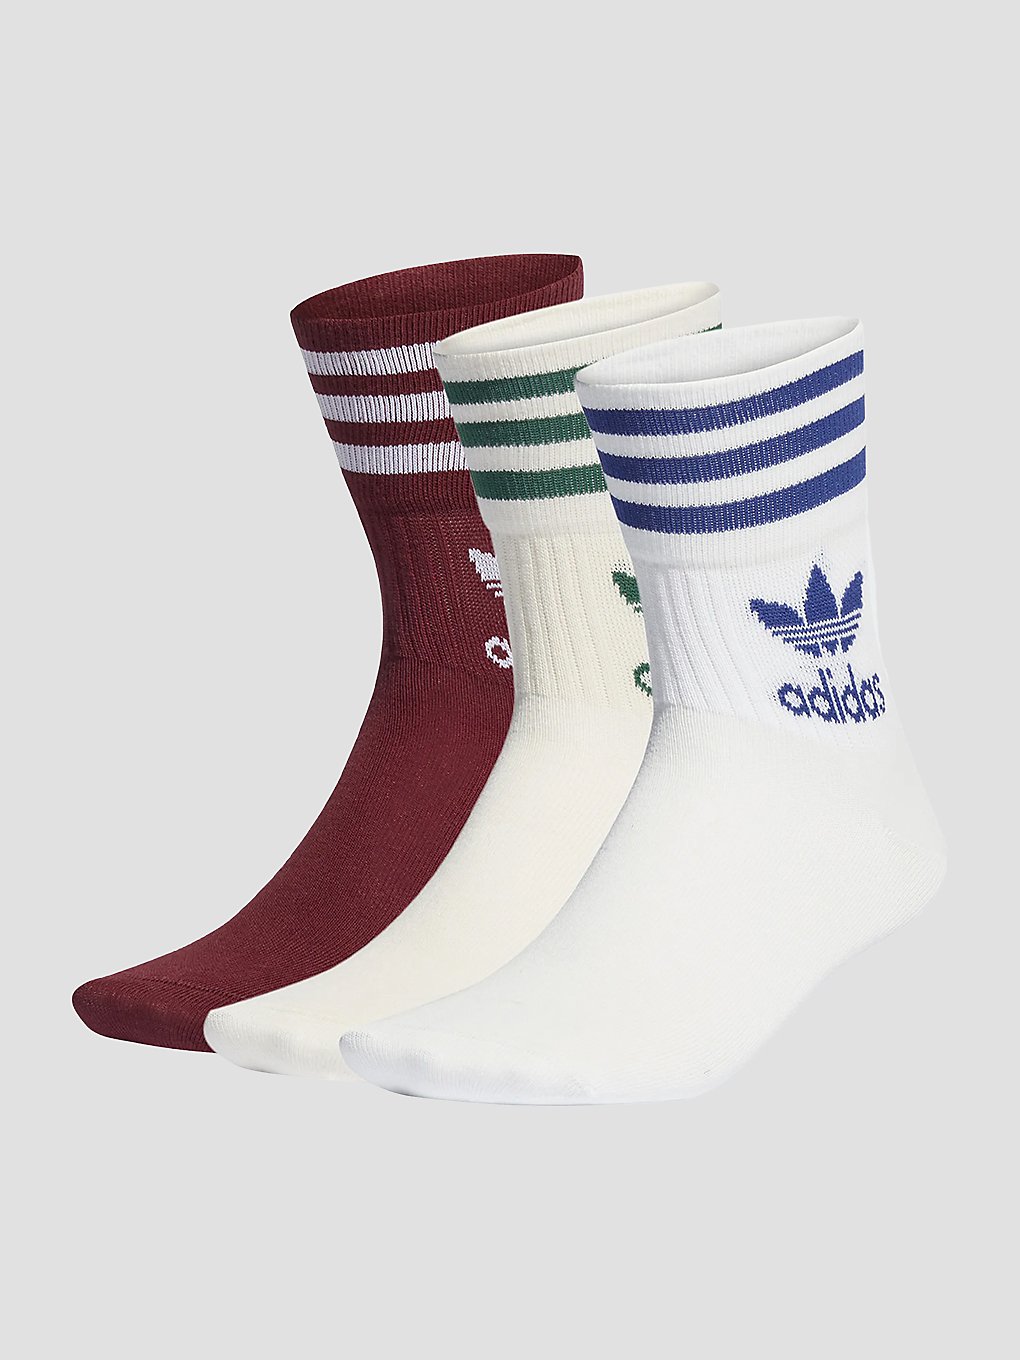 adidas Originals Mid Cut Crew Socks shared kaufen